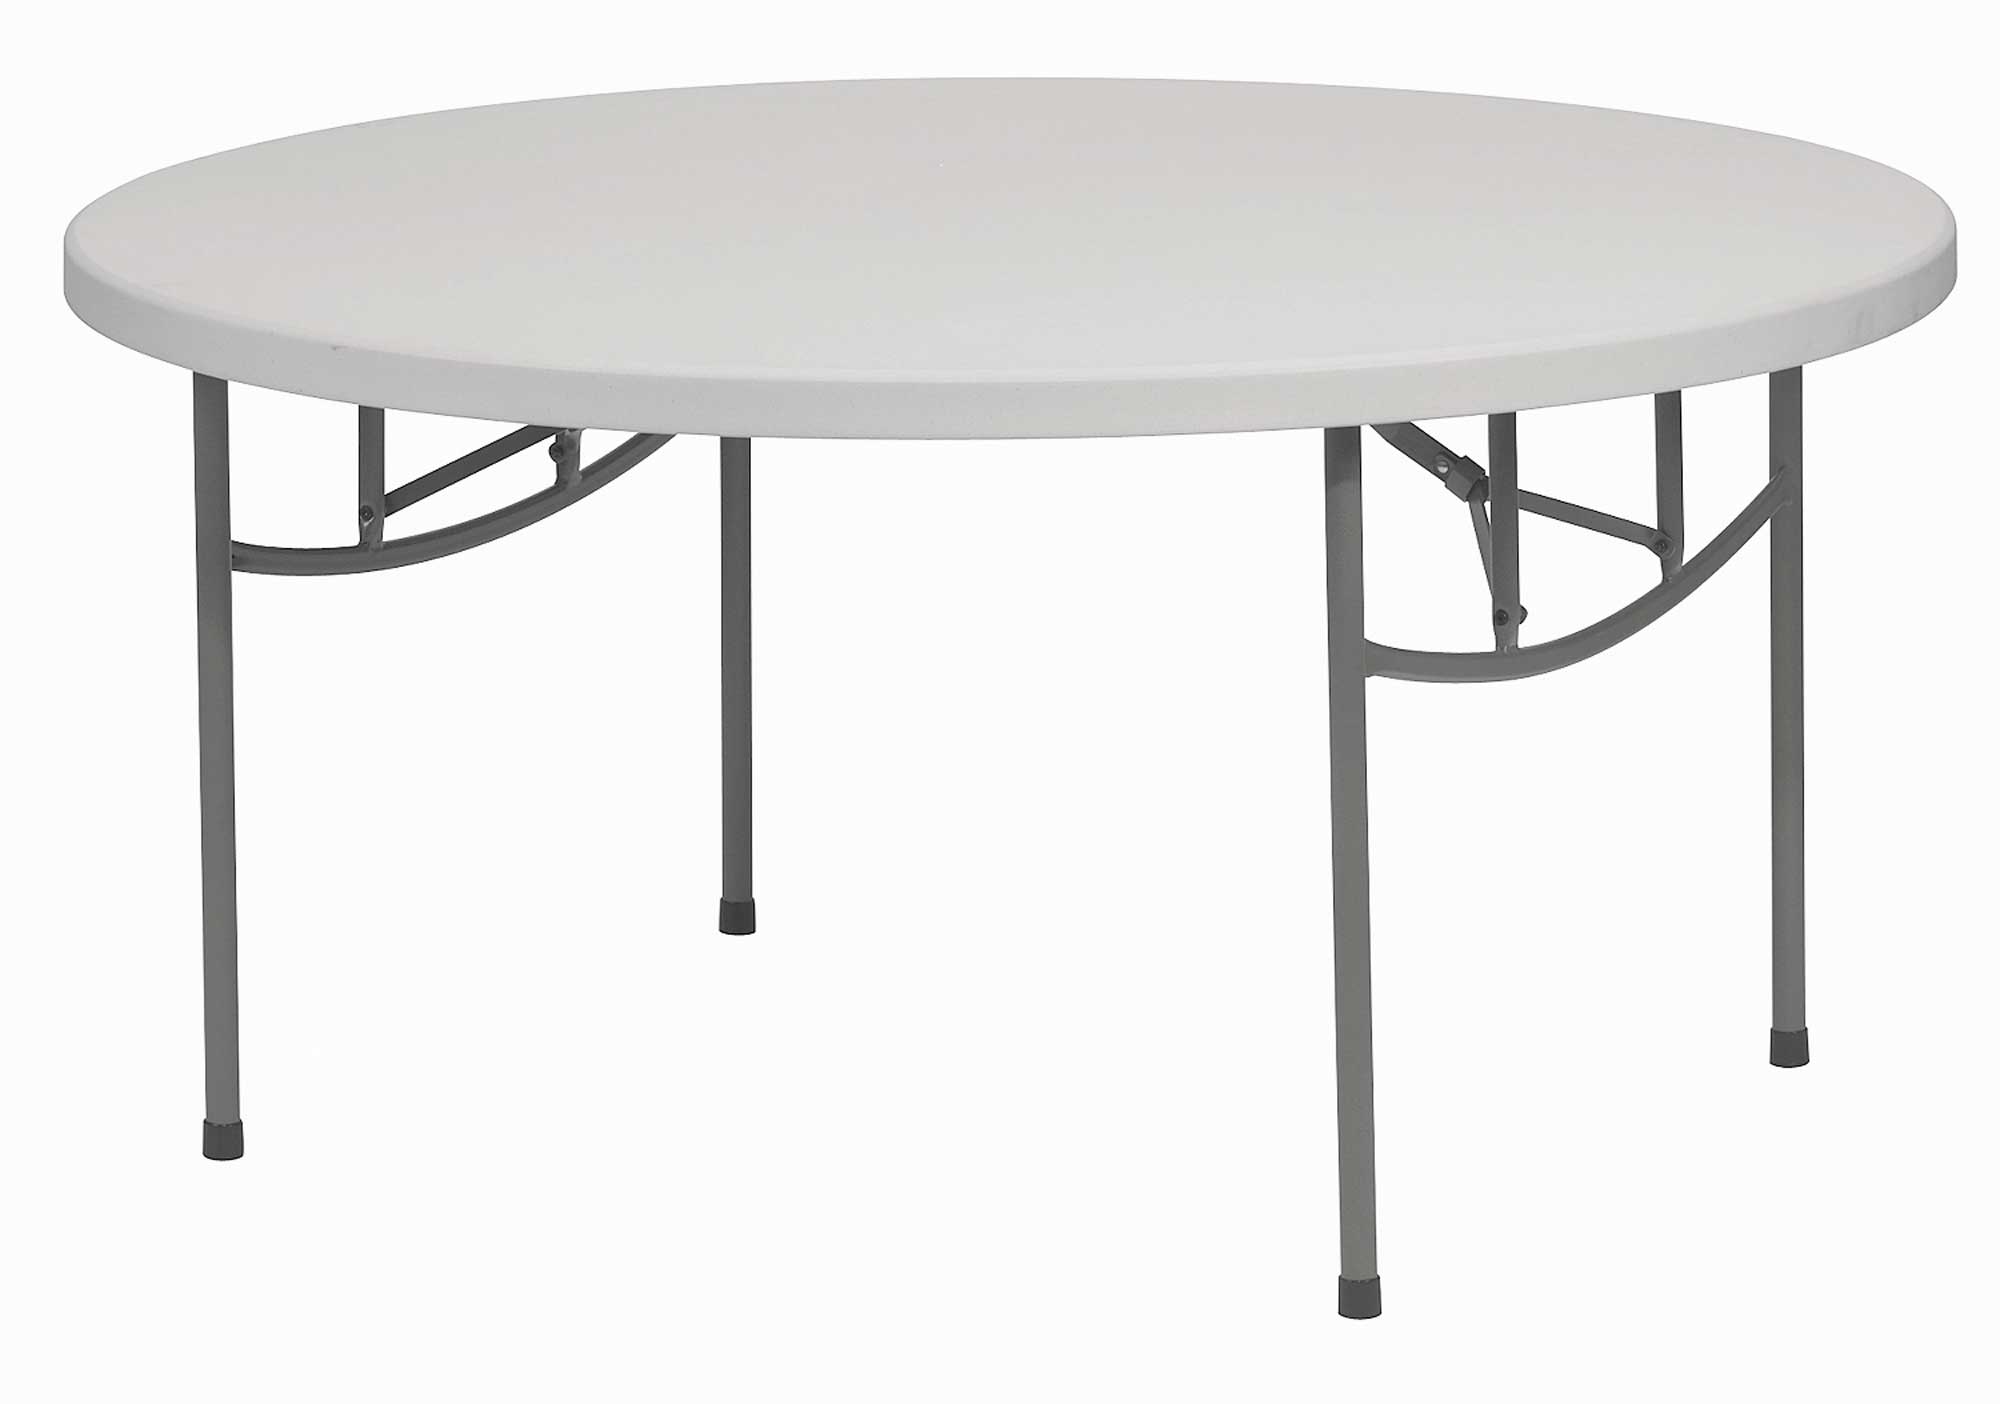 large round folding kitchen table